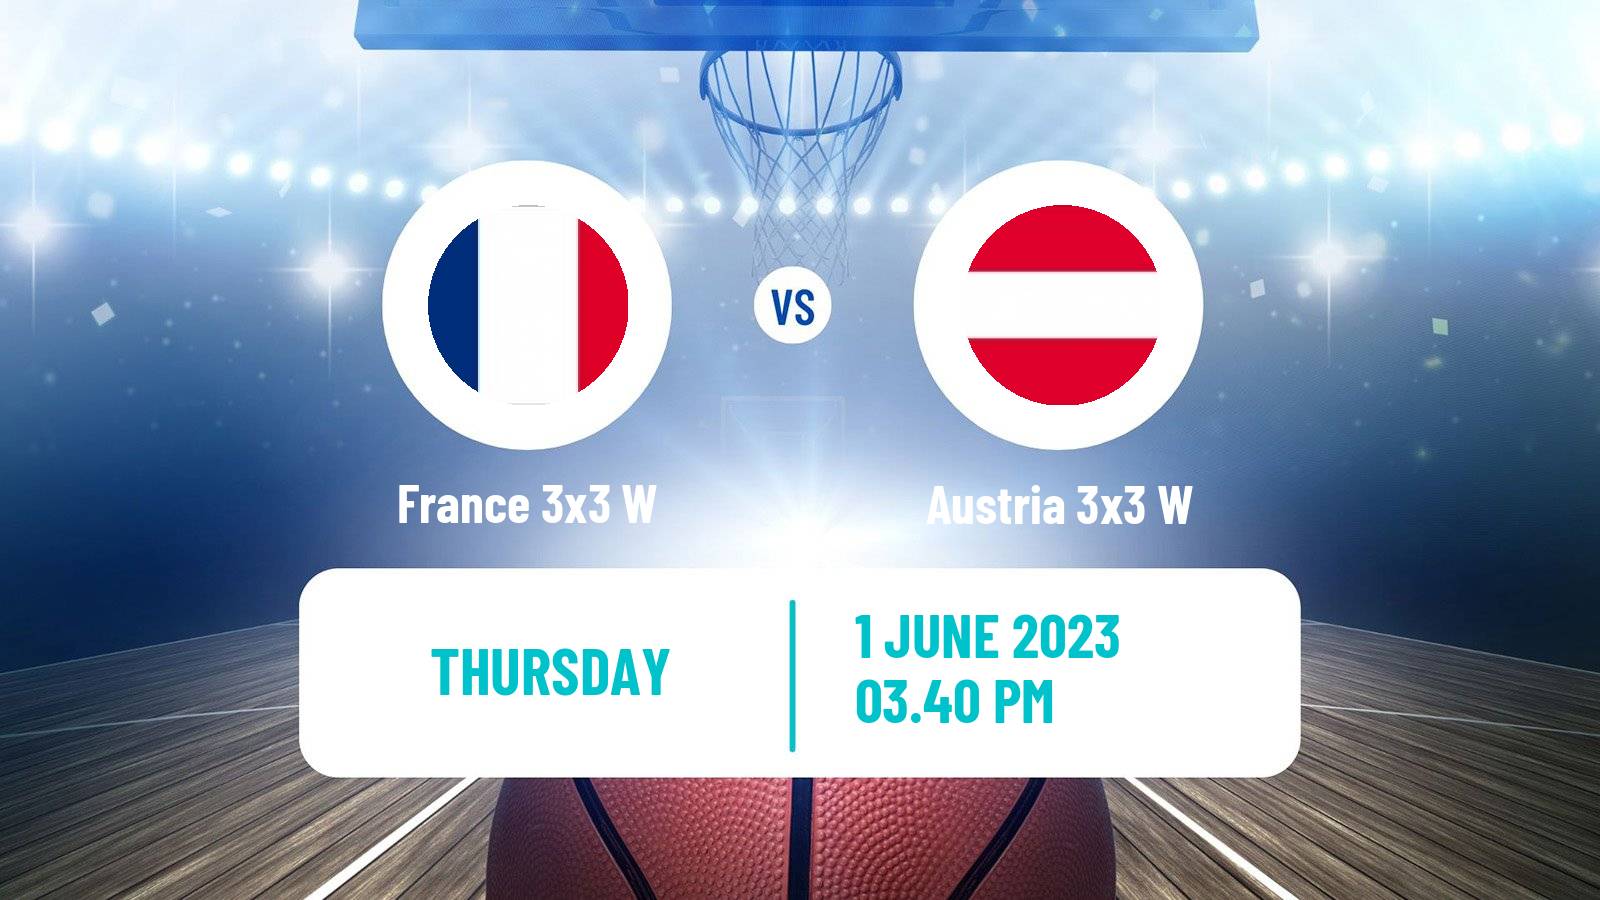 Basketball World Cup Basketball 3x3 Women France 3x3 W - Austria 3x3 W